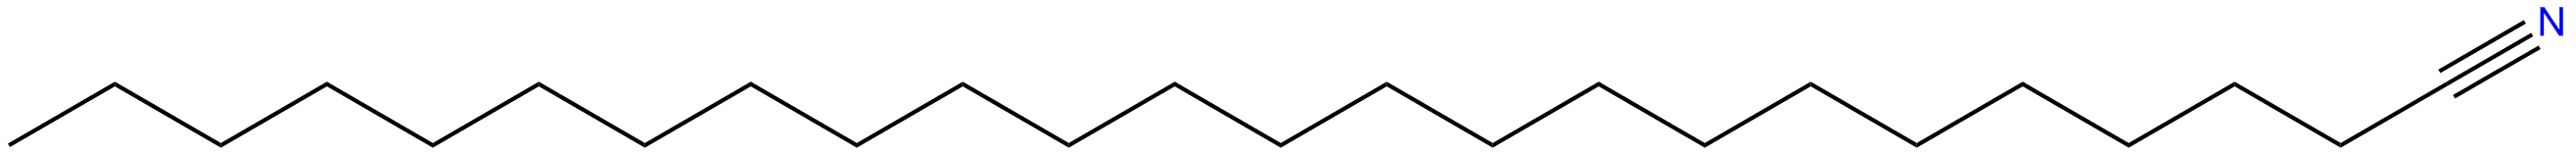 Image of tetracosanenitrile